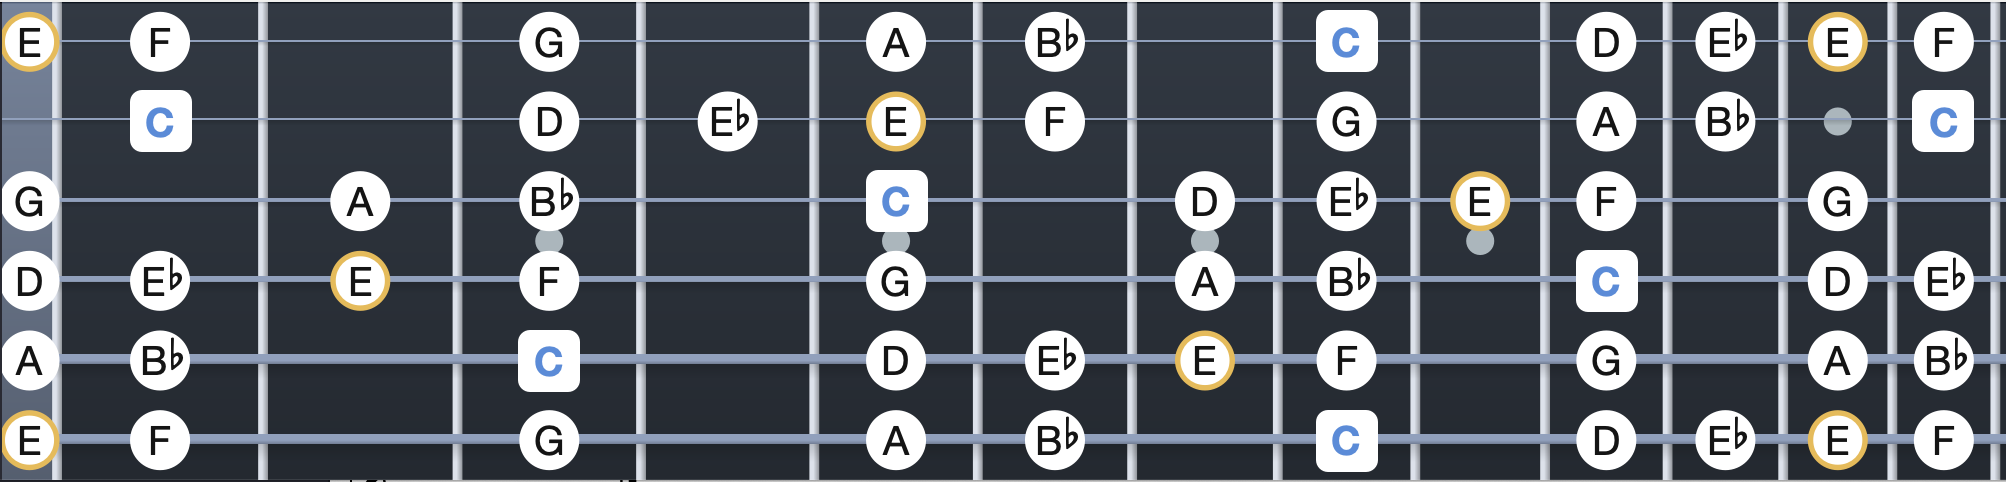 C Dorian Bebop Scale on Guitar